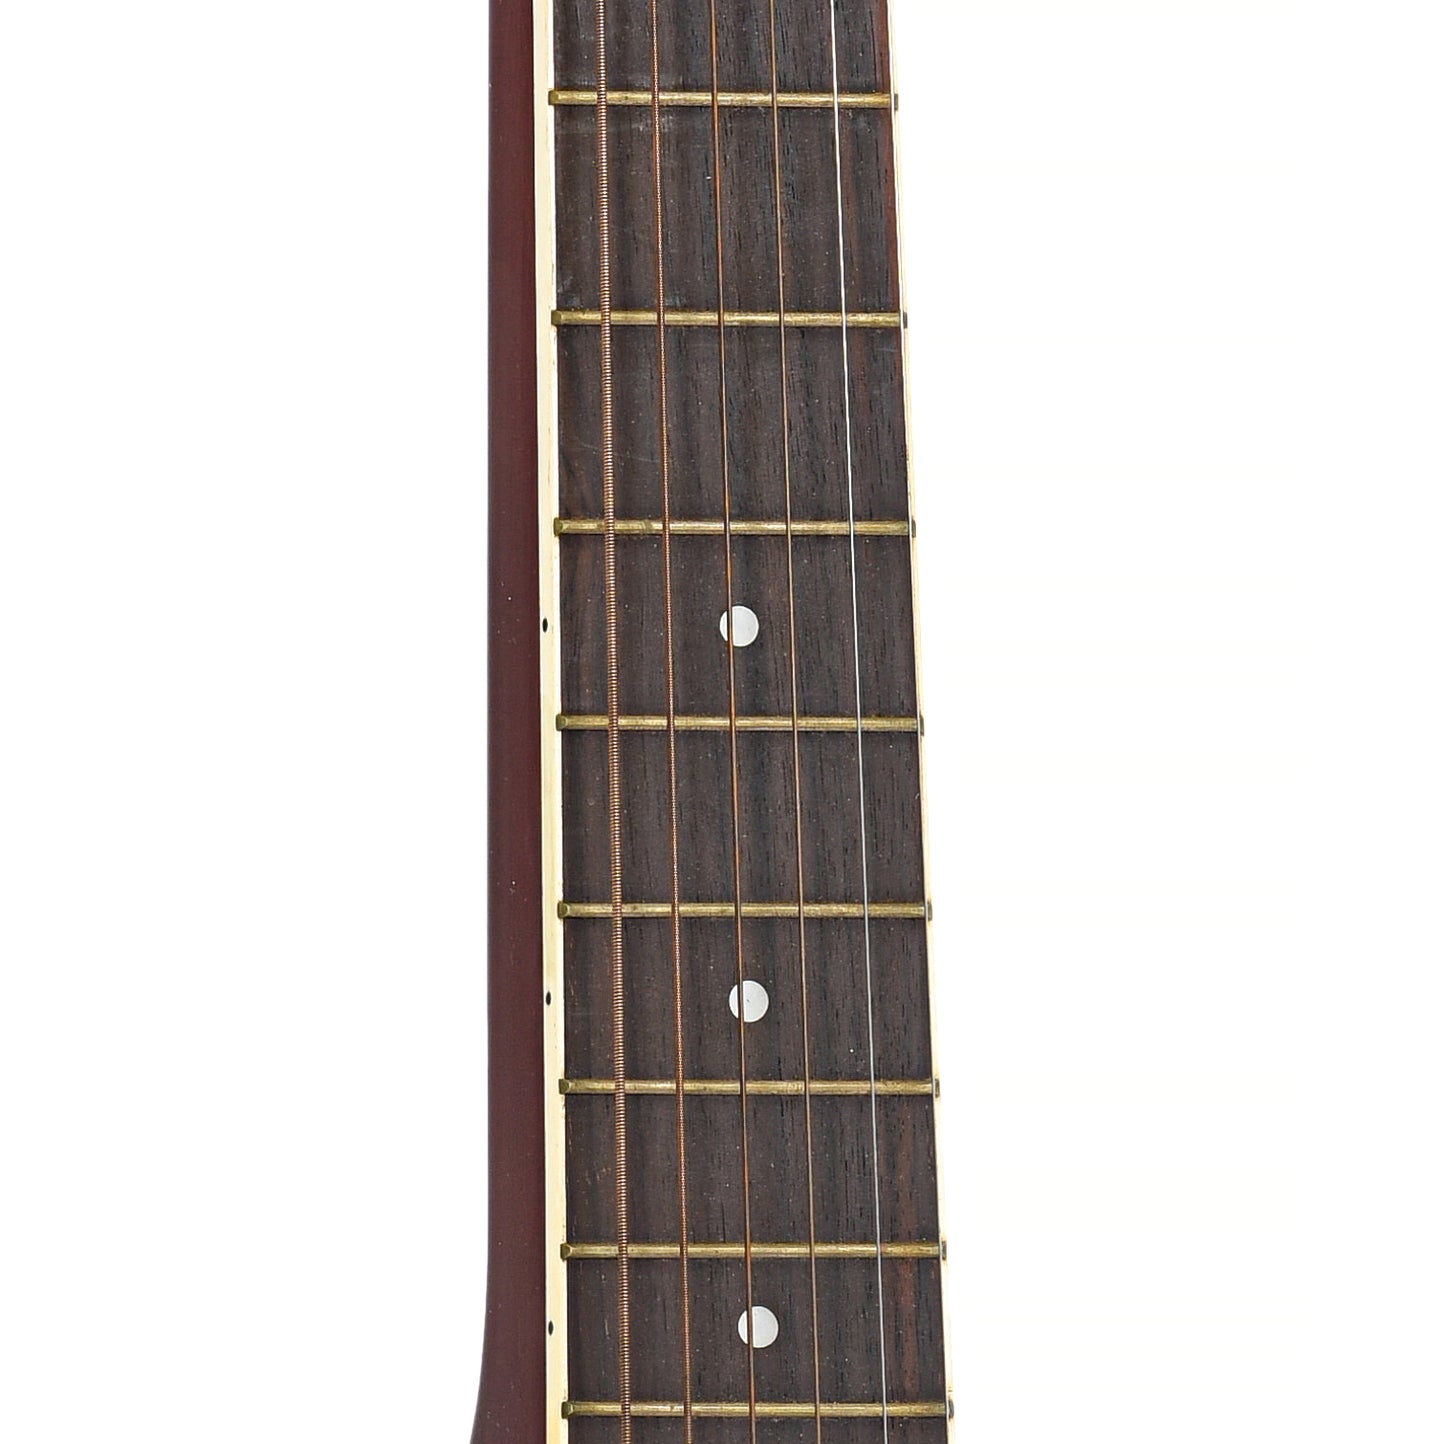 Fretbaord of Regal RD-45S Squareneck Resonator Guitar (1990's)